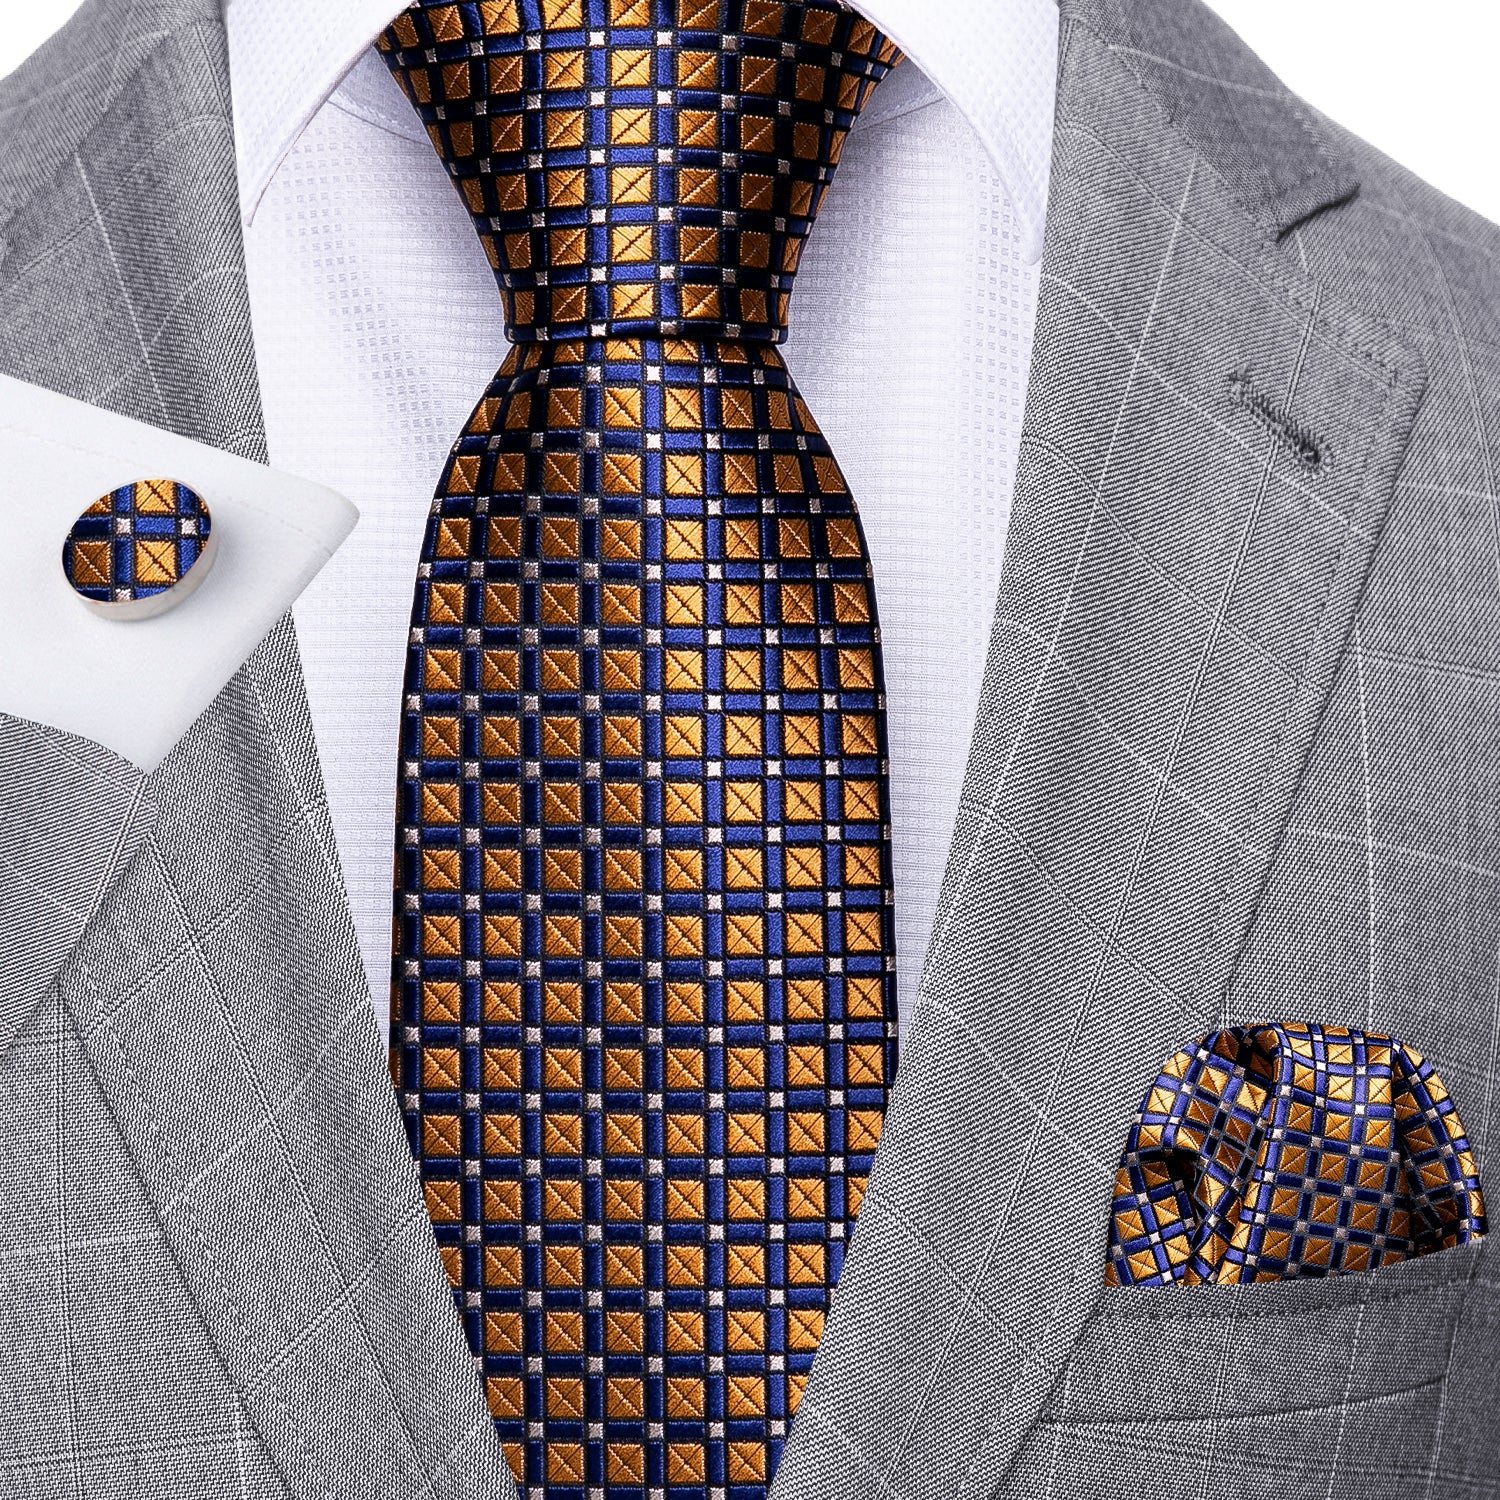 Barry.wang Brown Tie Blue Polka Dot Silk Solid Men's Silk Tie Hanky Cufflinks Set New Arrival